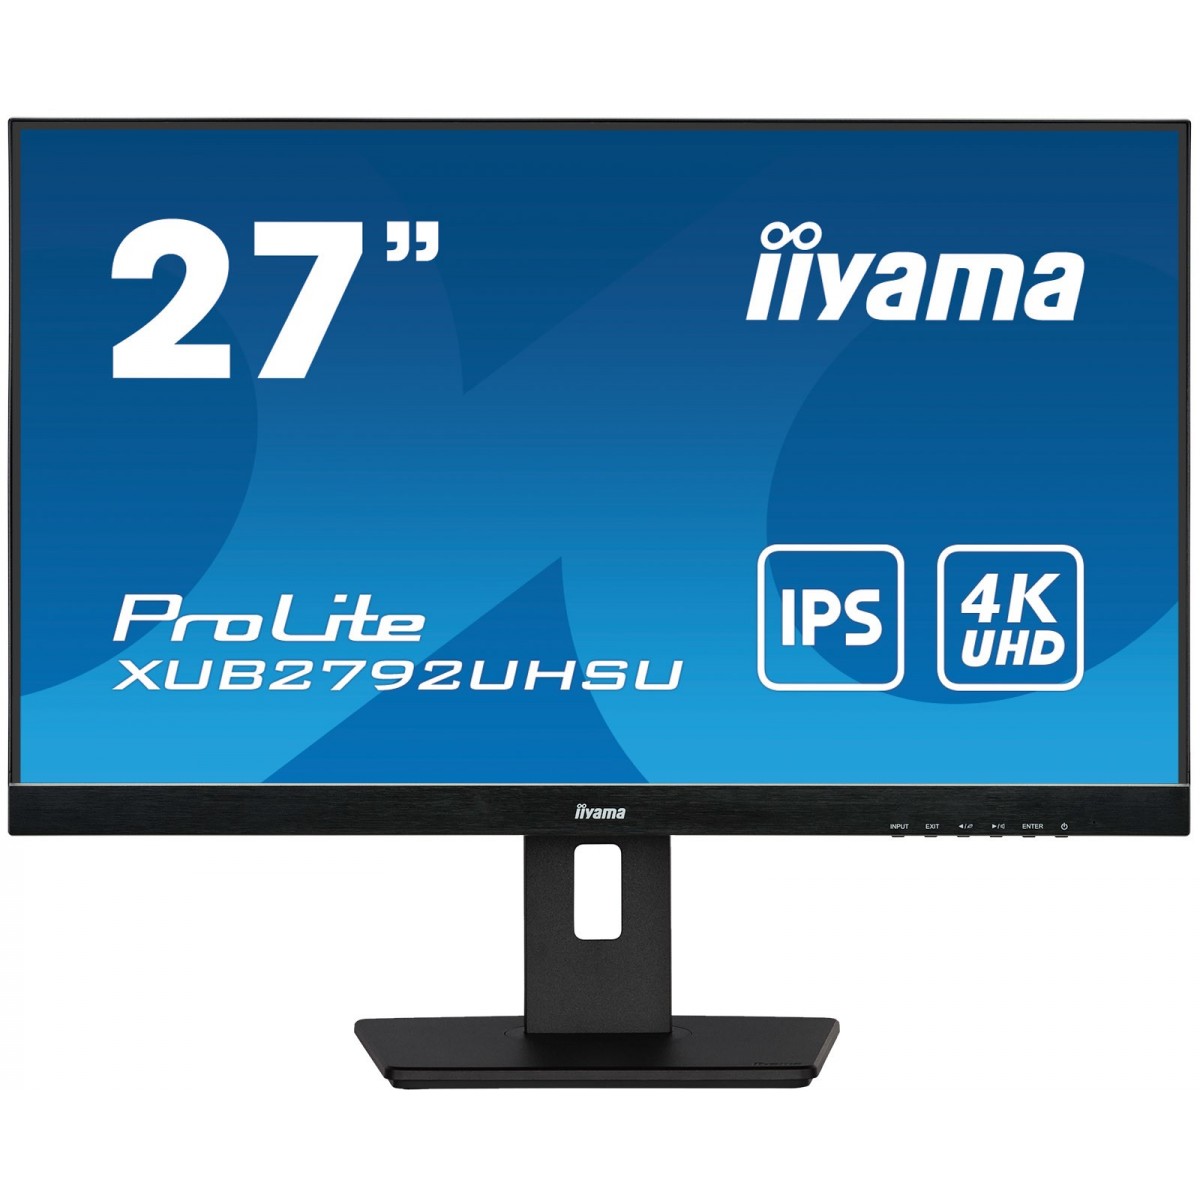 Iiyama 27W LCD Business 4K UHD IPS - Flat Screen - 27